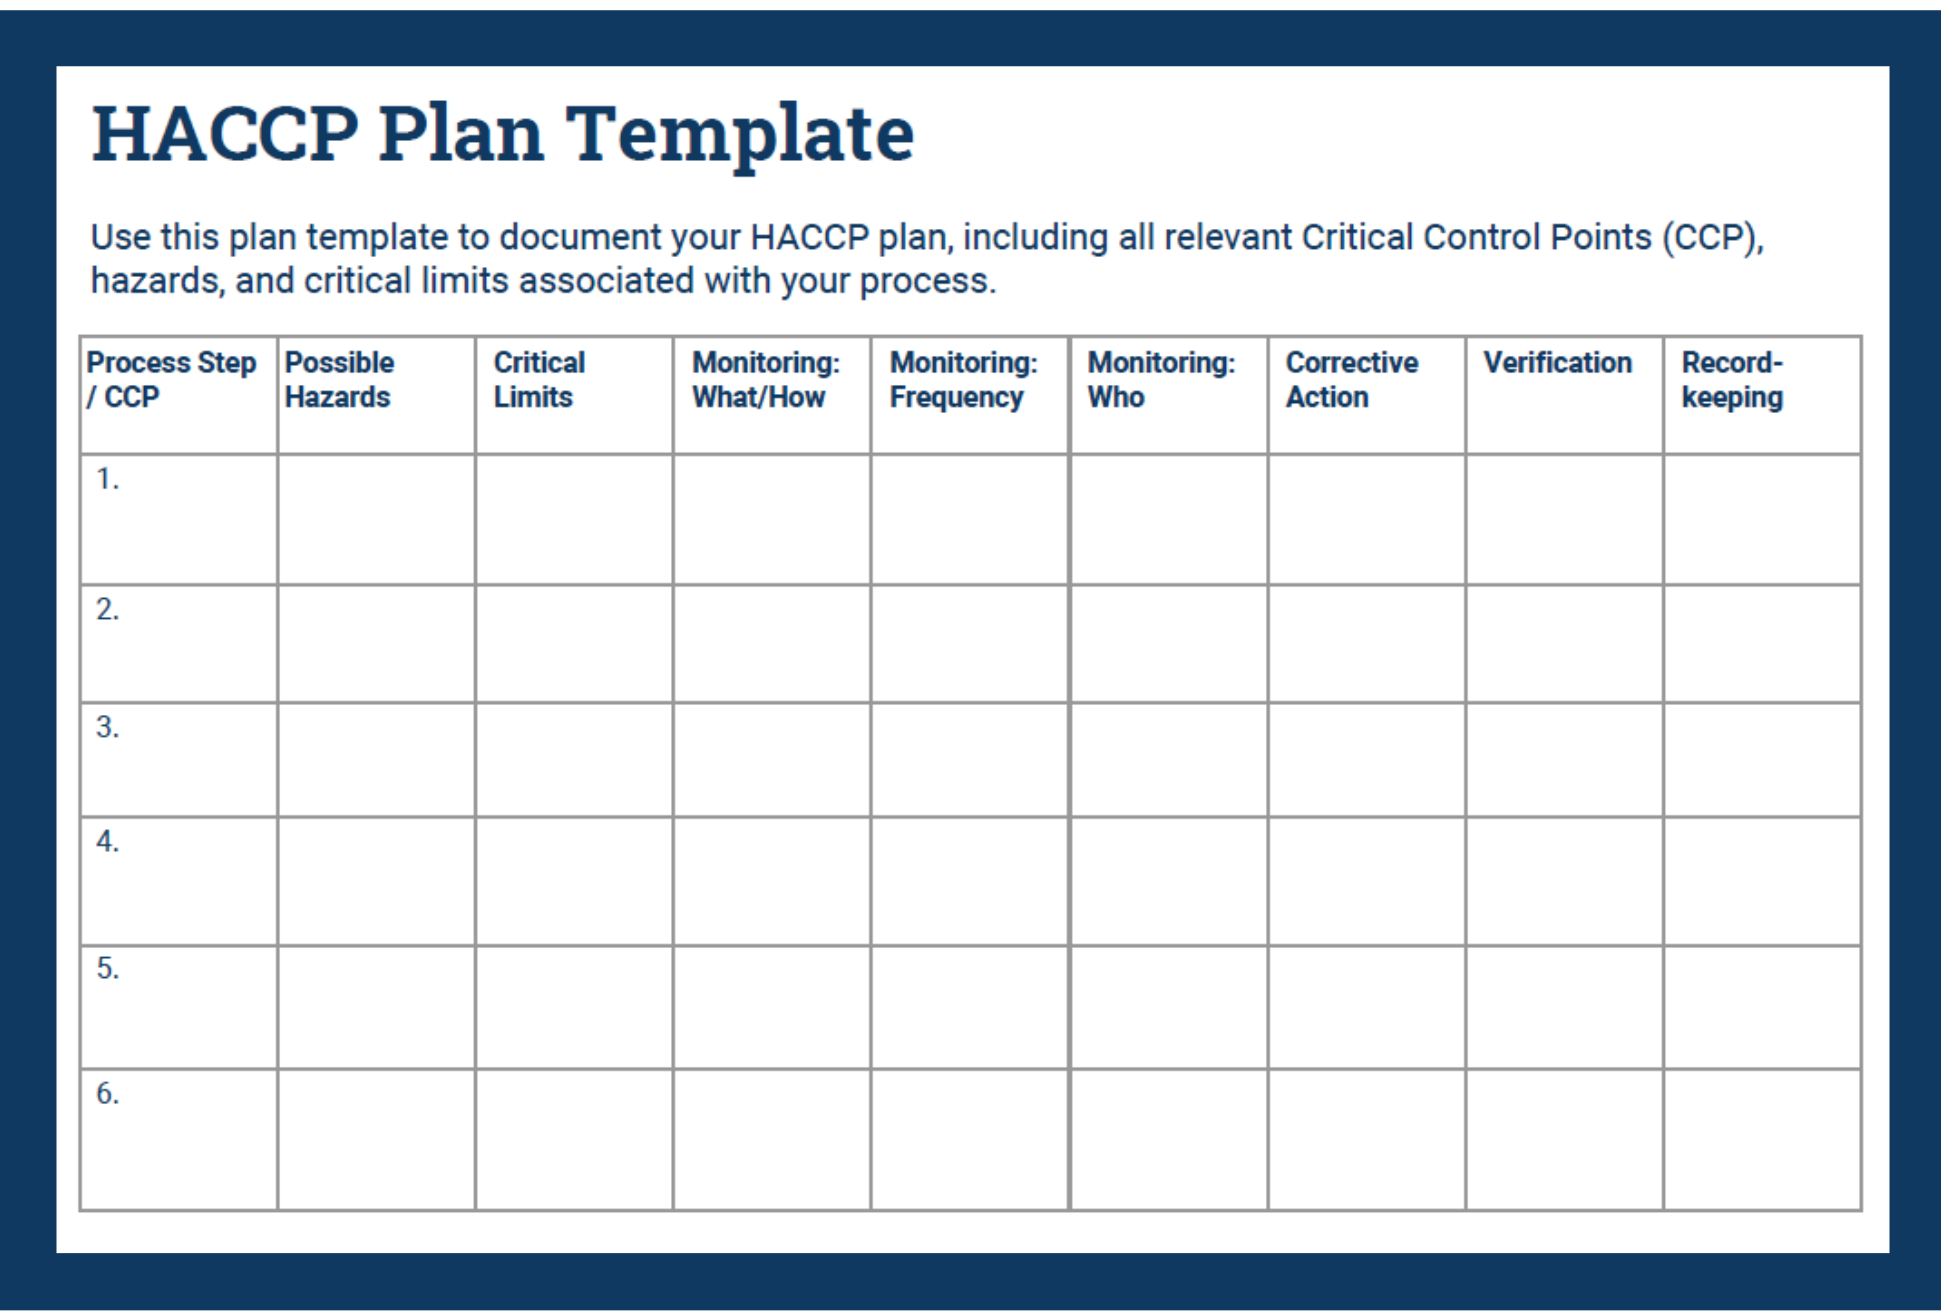 HACCP Plan Template 1 